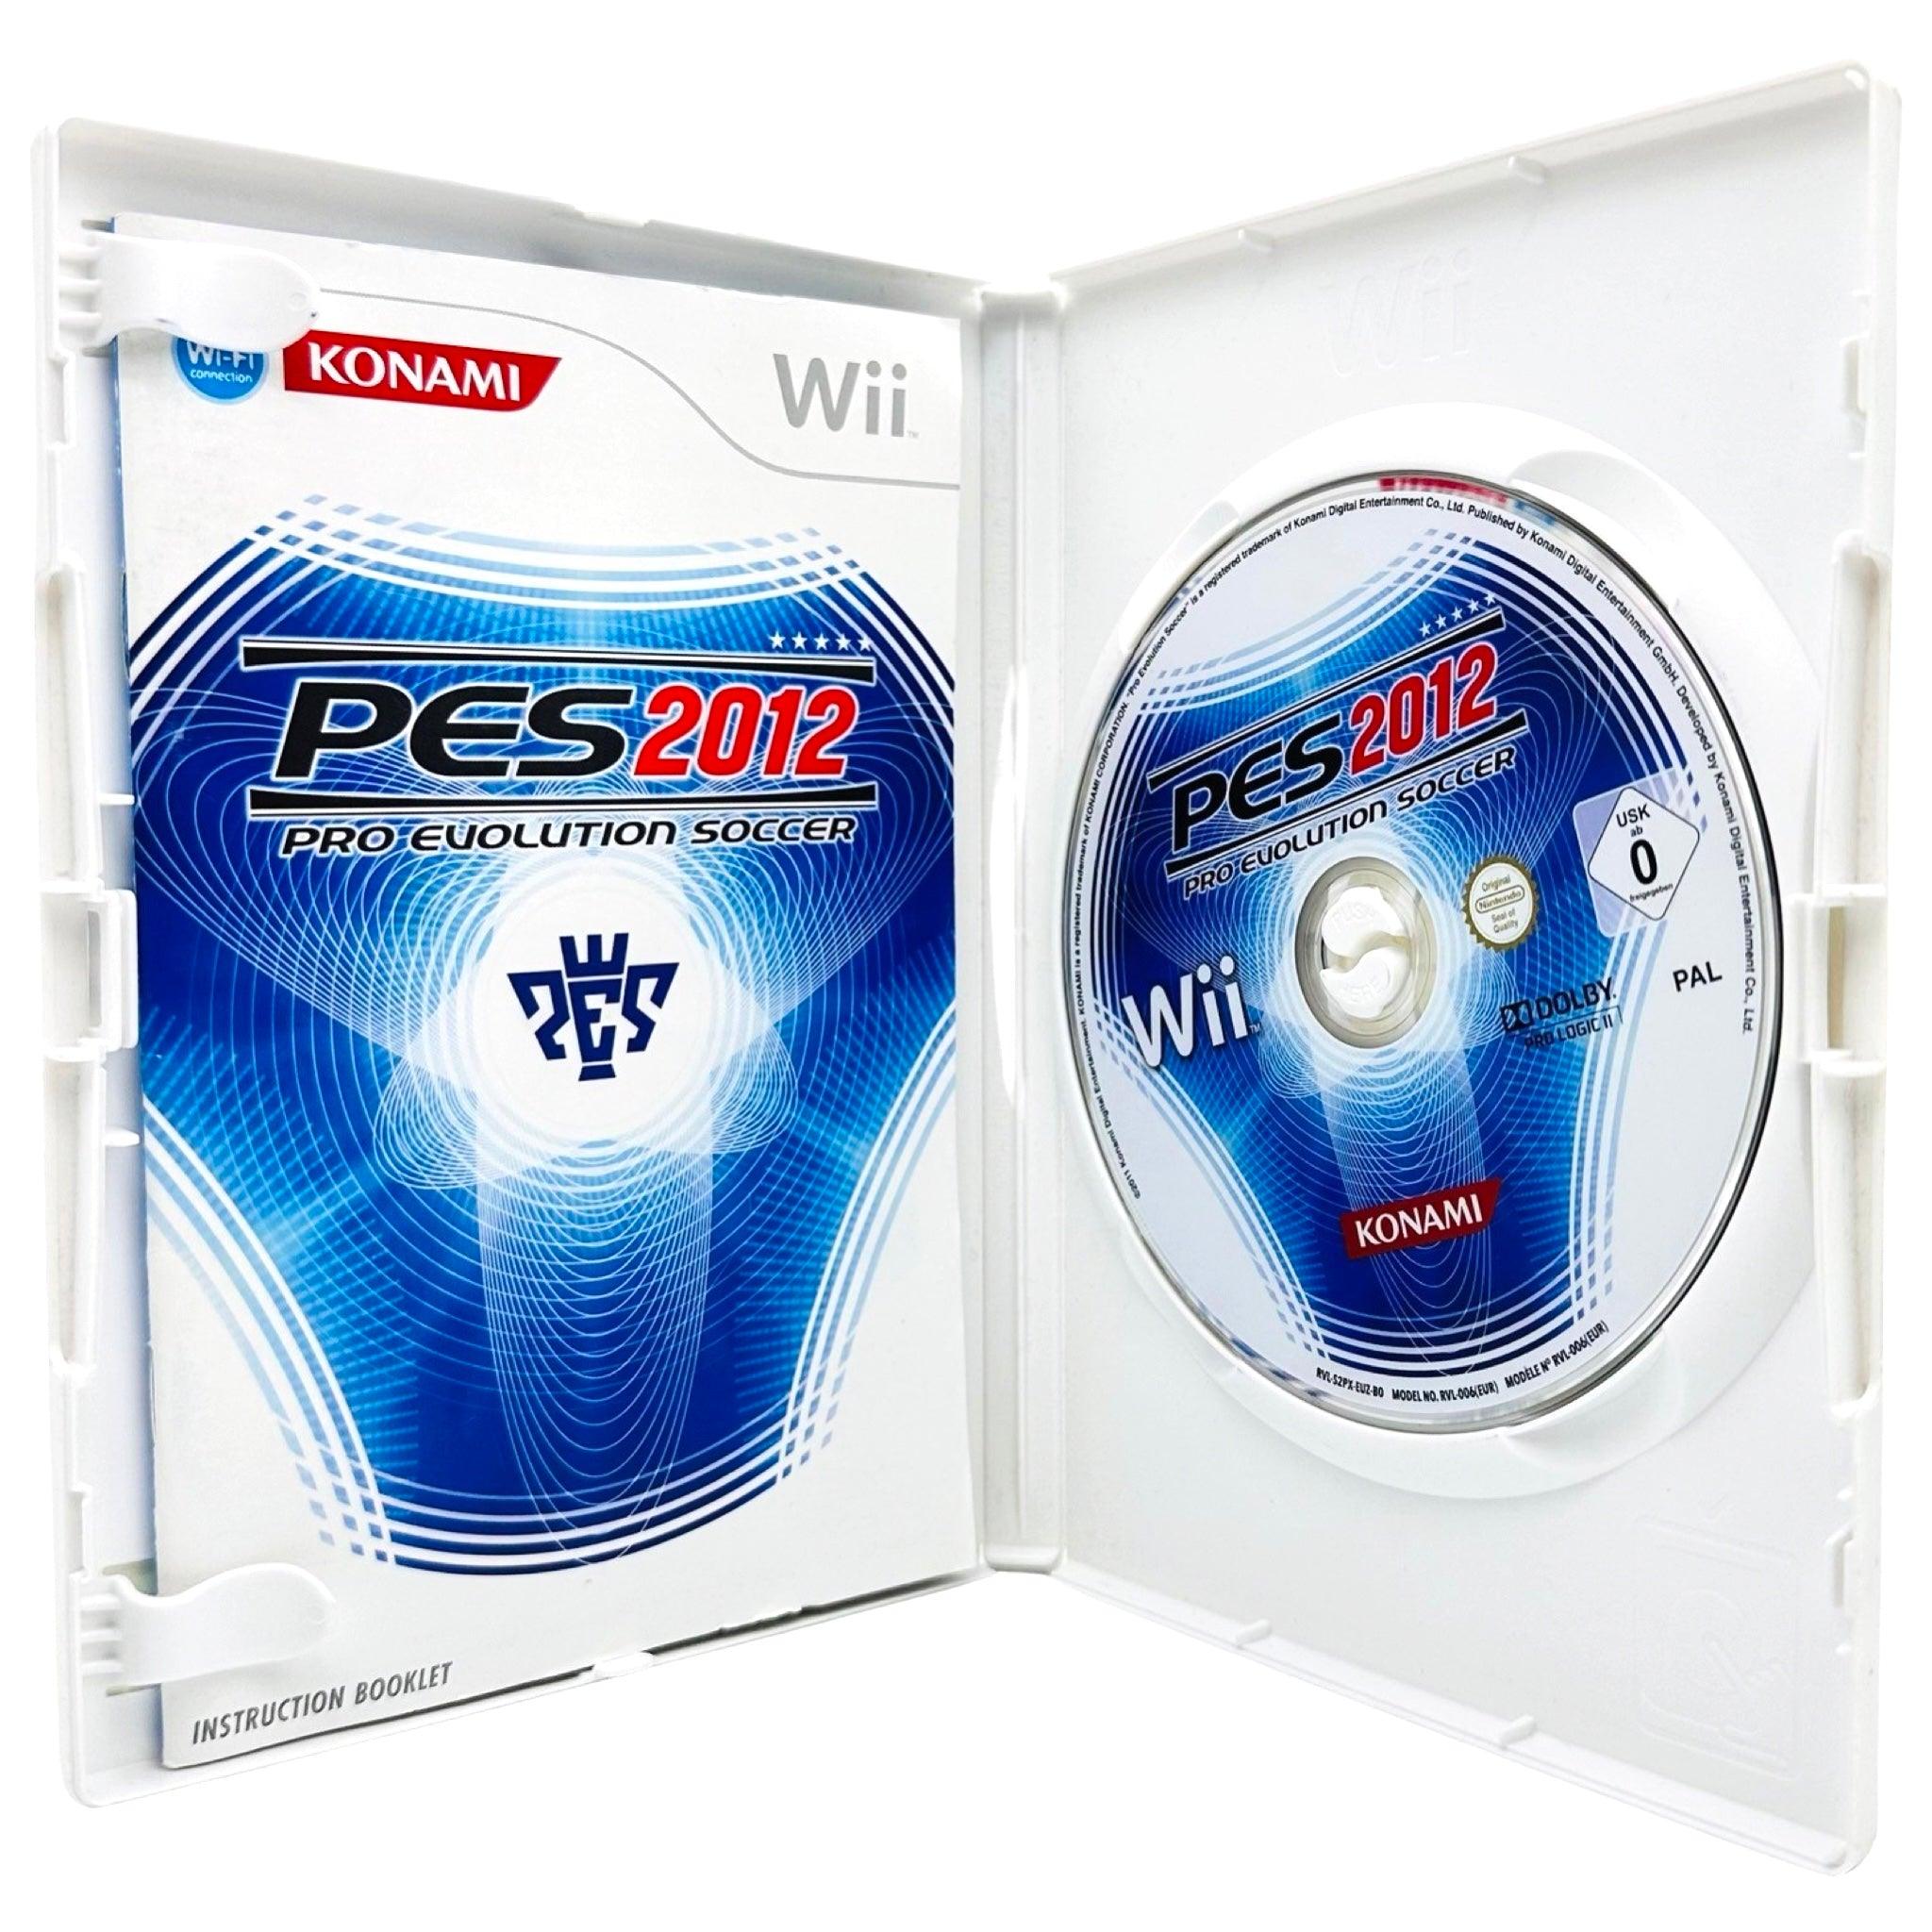 Wii: Pro Evolution Soccer 2012 - RetroGaming.no